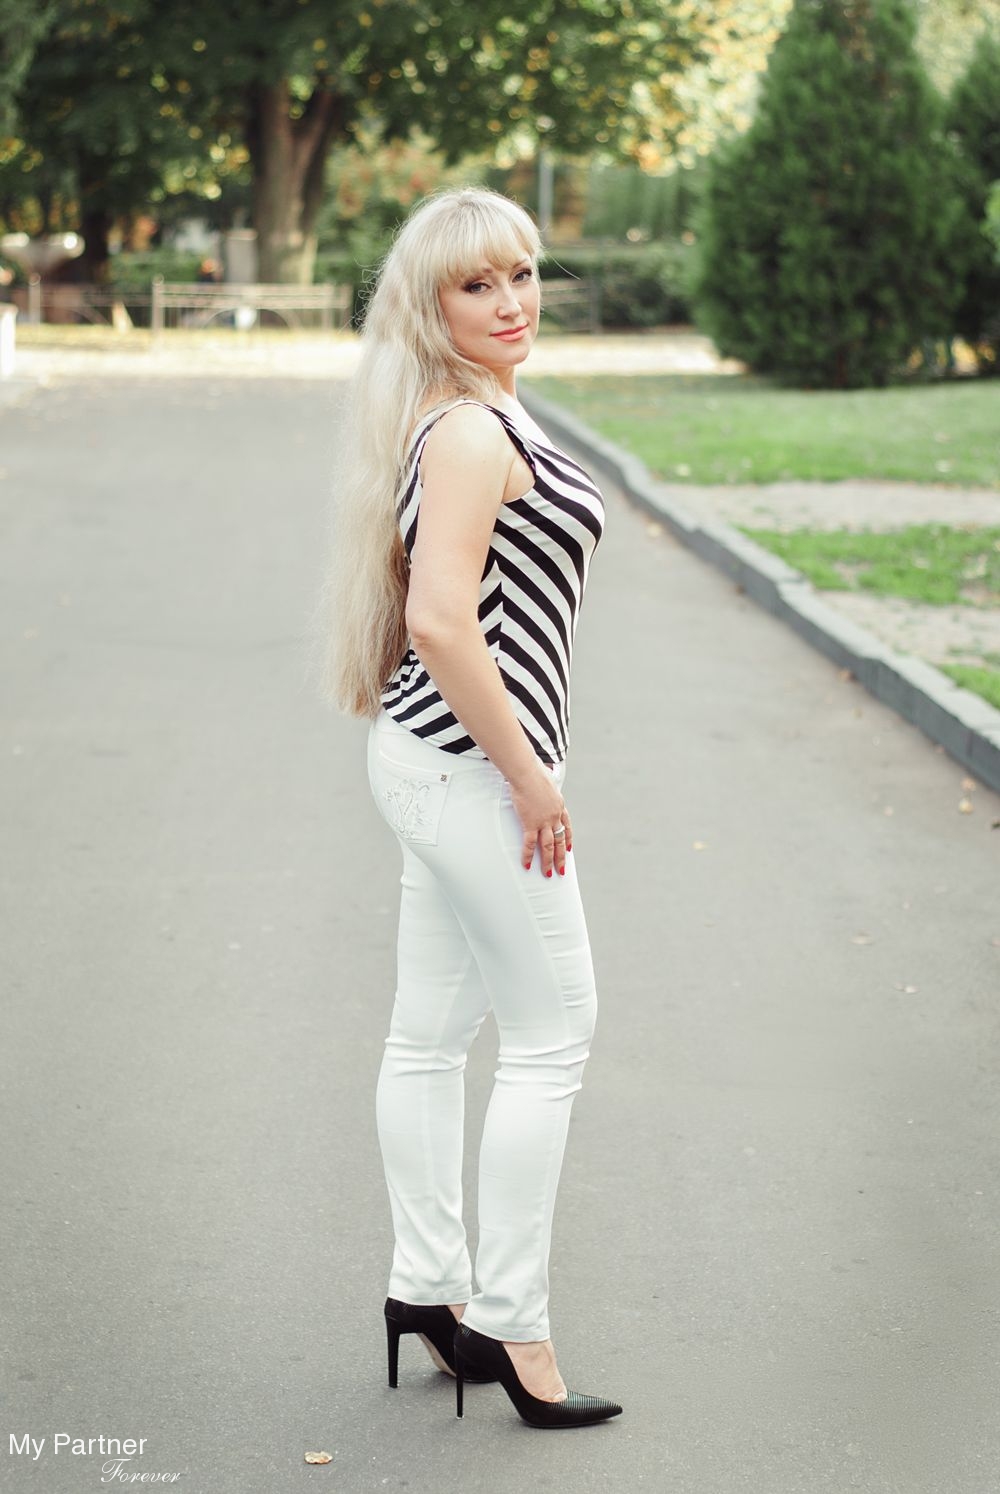 Dating Site to Meet Single Ukrainian Girl Nataliya from Poltava, Ukraine